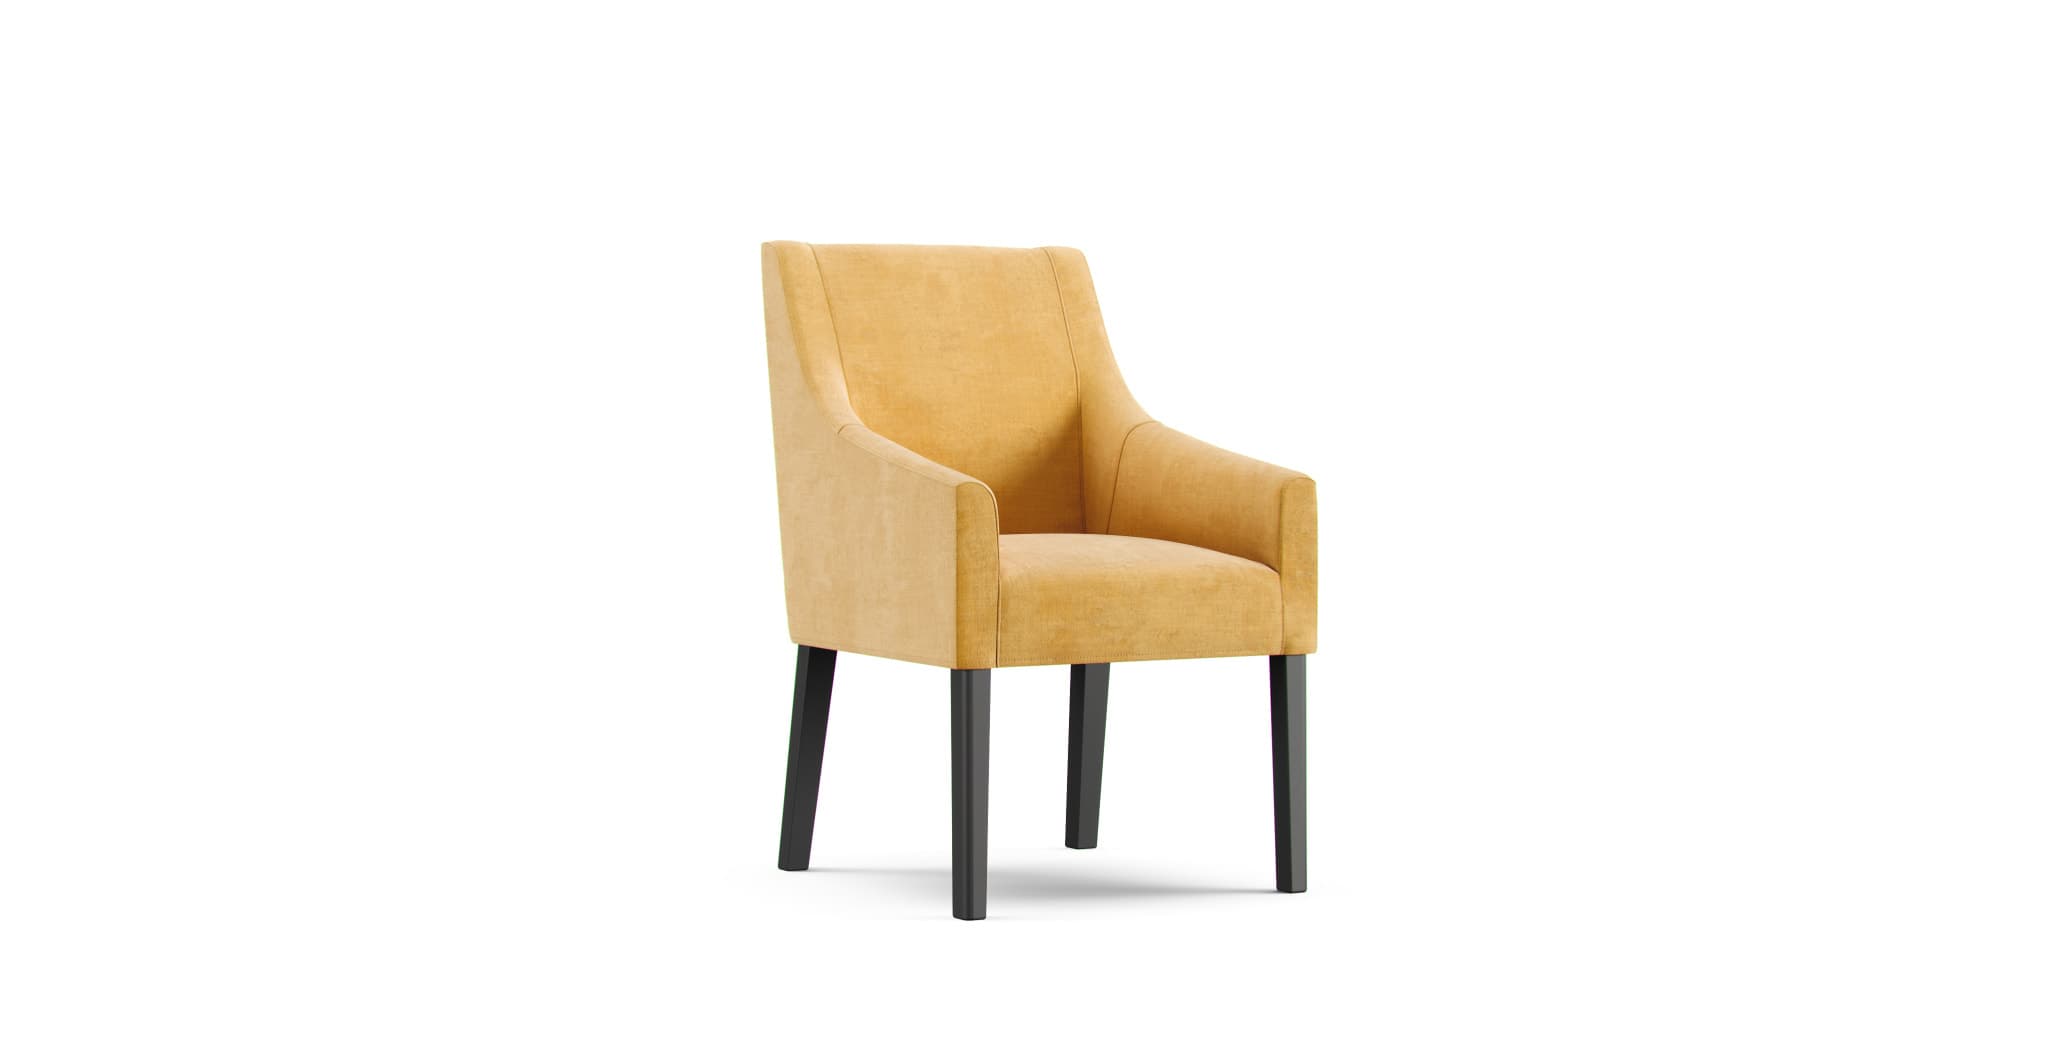 Ikea Sakarias Dining Chair Slipcover Comfort Works